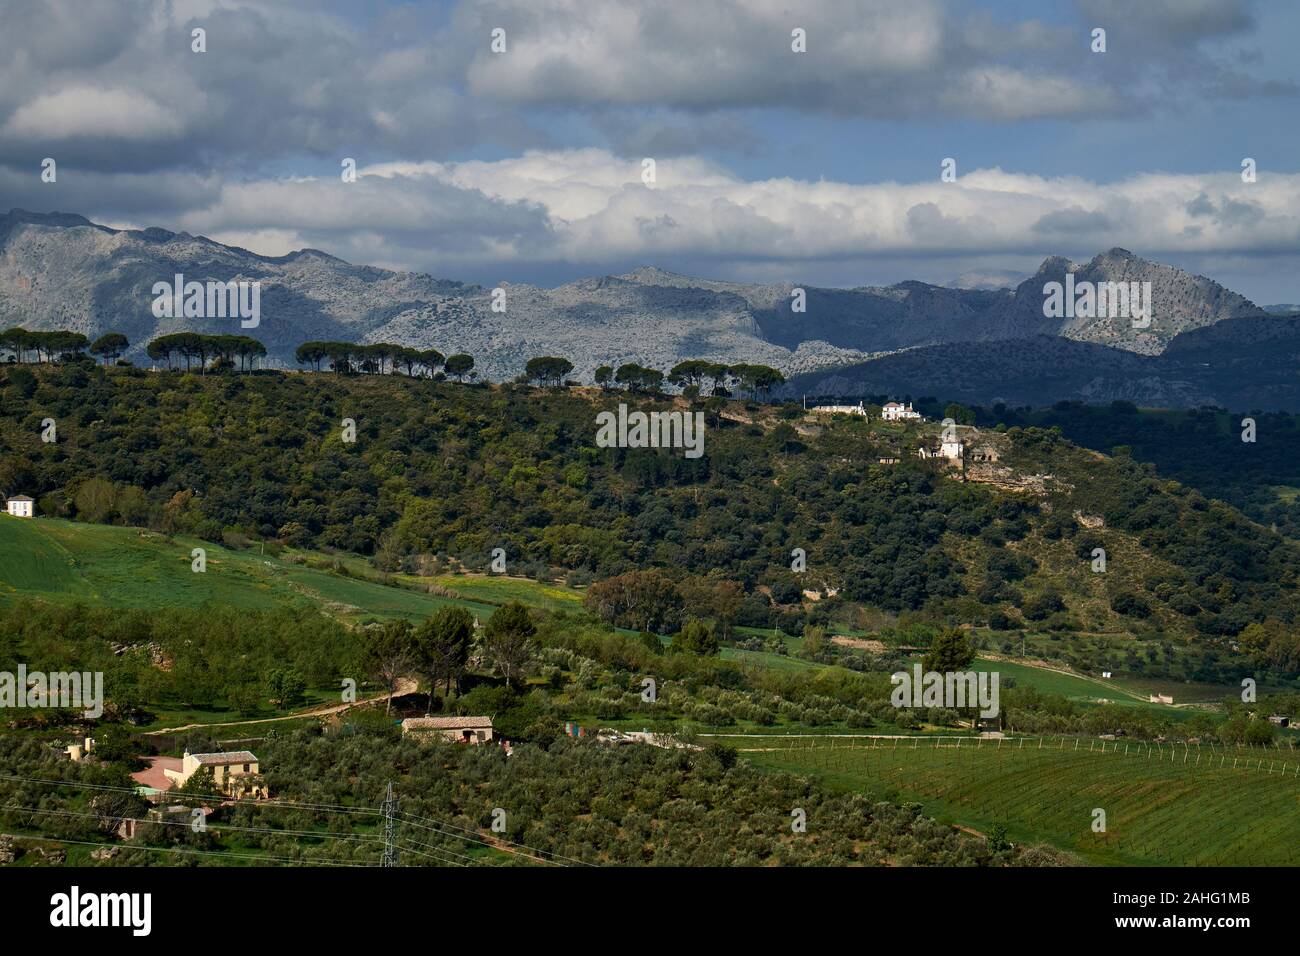 Sierra de Grazalema Natural Park seen from Ronda, Andalusia, Spain Stock Photo